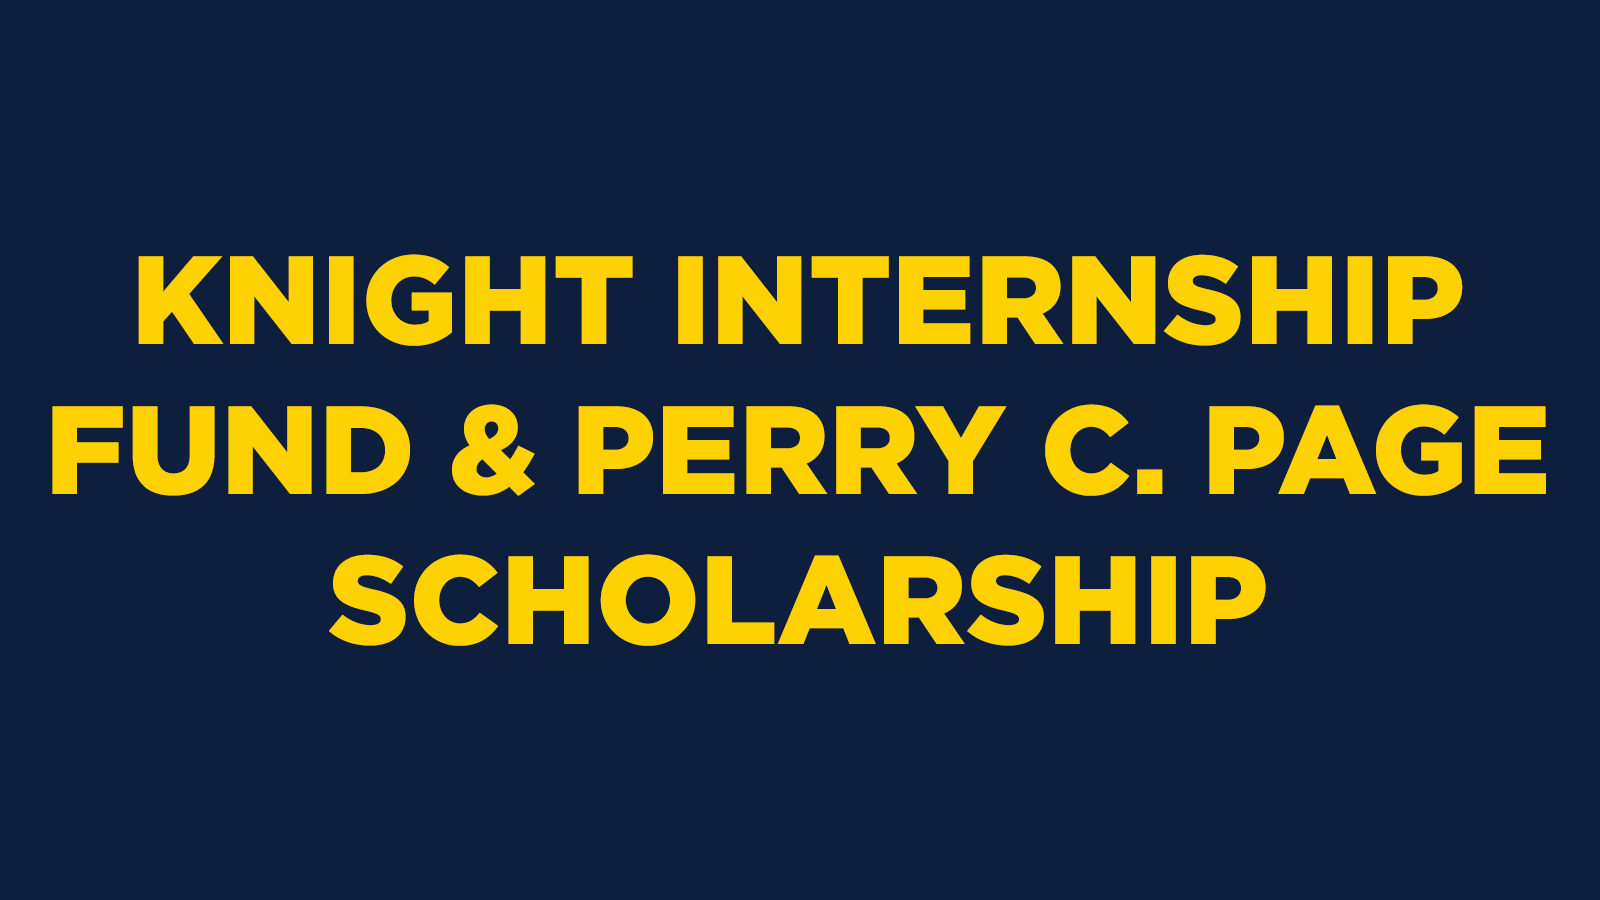 Knight Internship Fund & Perry C. Page Scholarship